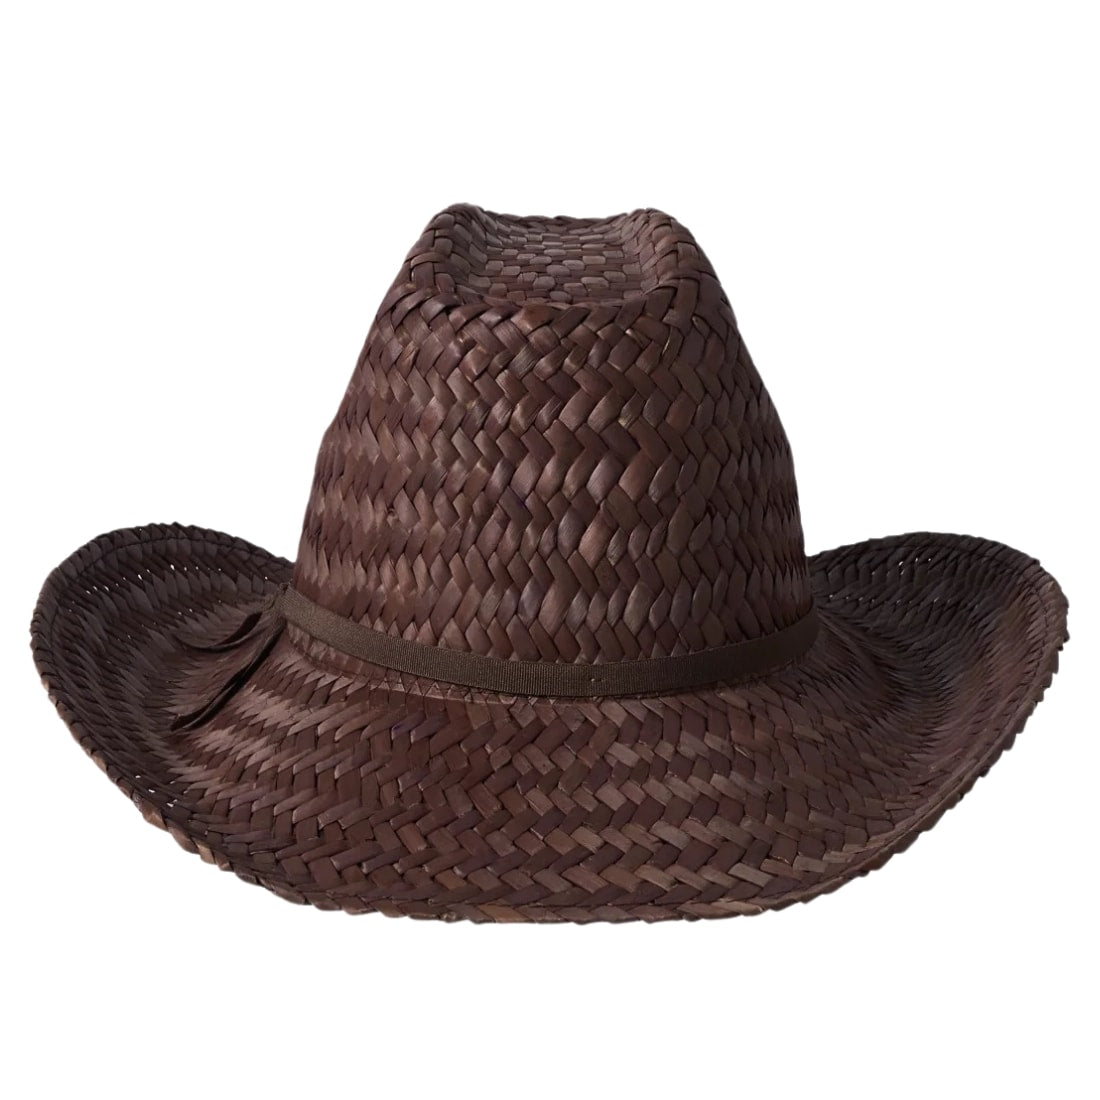 Brixton Houston Straw Cowboy Hat - Toffee